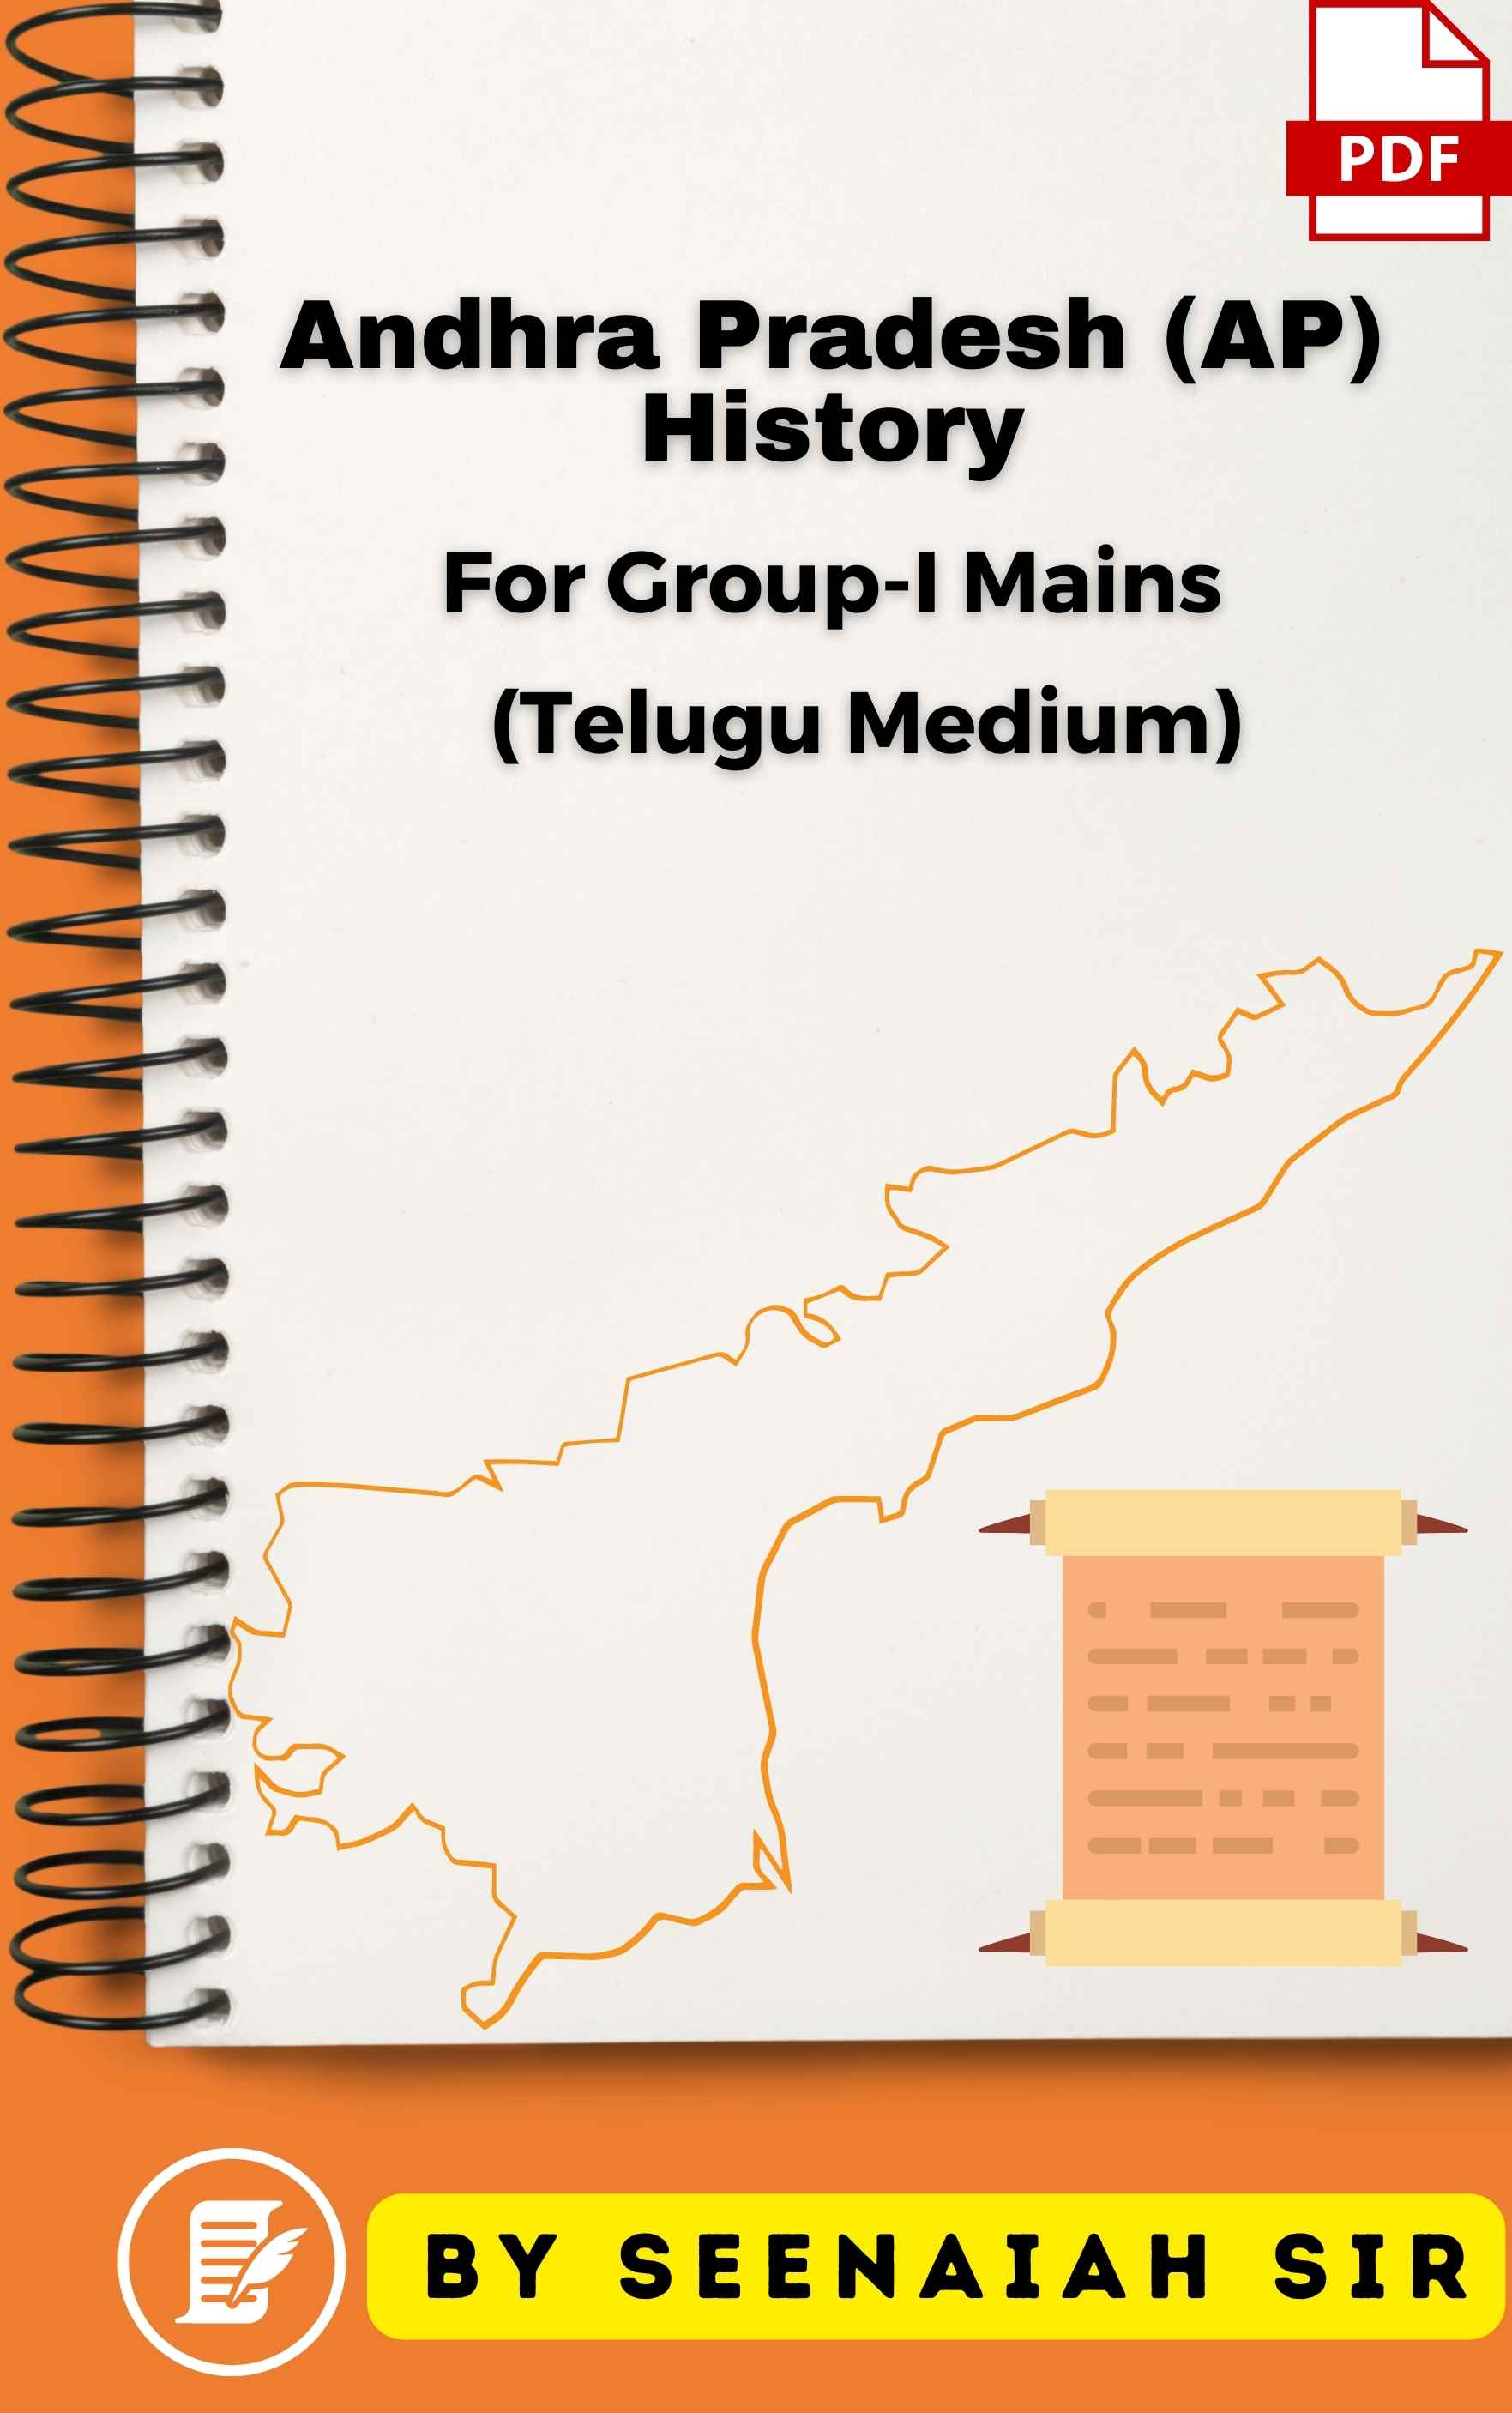 Andhra Pradesh (AP) History for Group-I Mains (Hand Written Class Notes Telugu Medium) - PDF